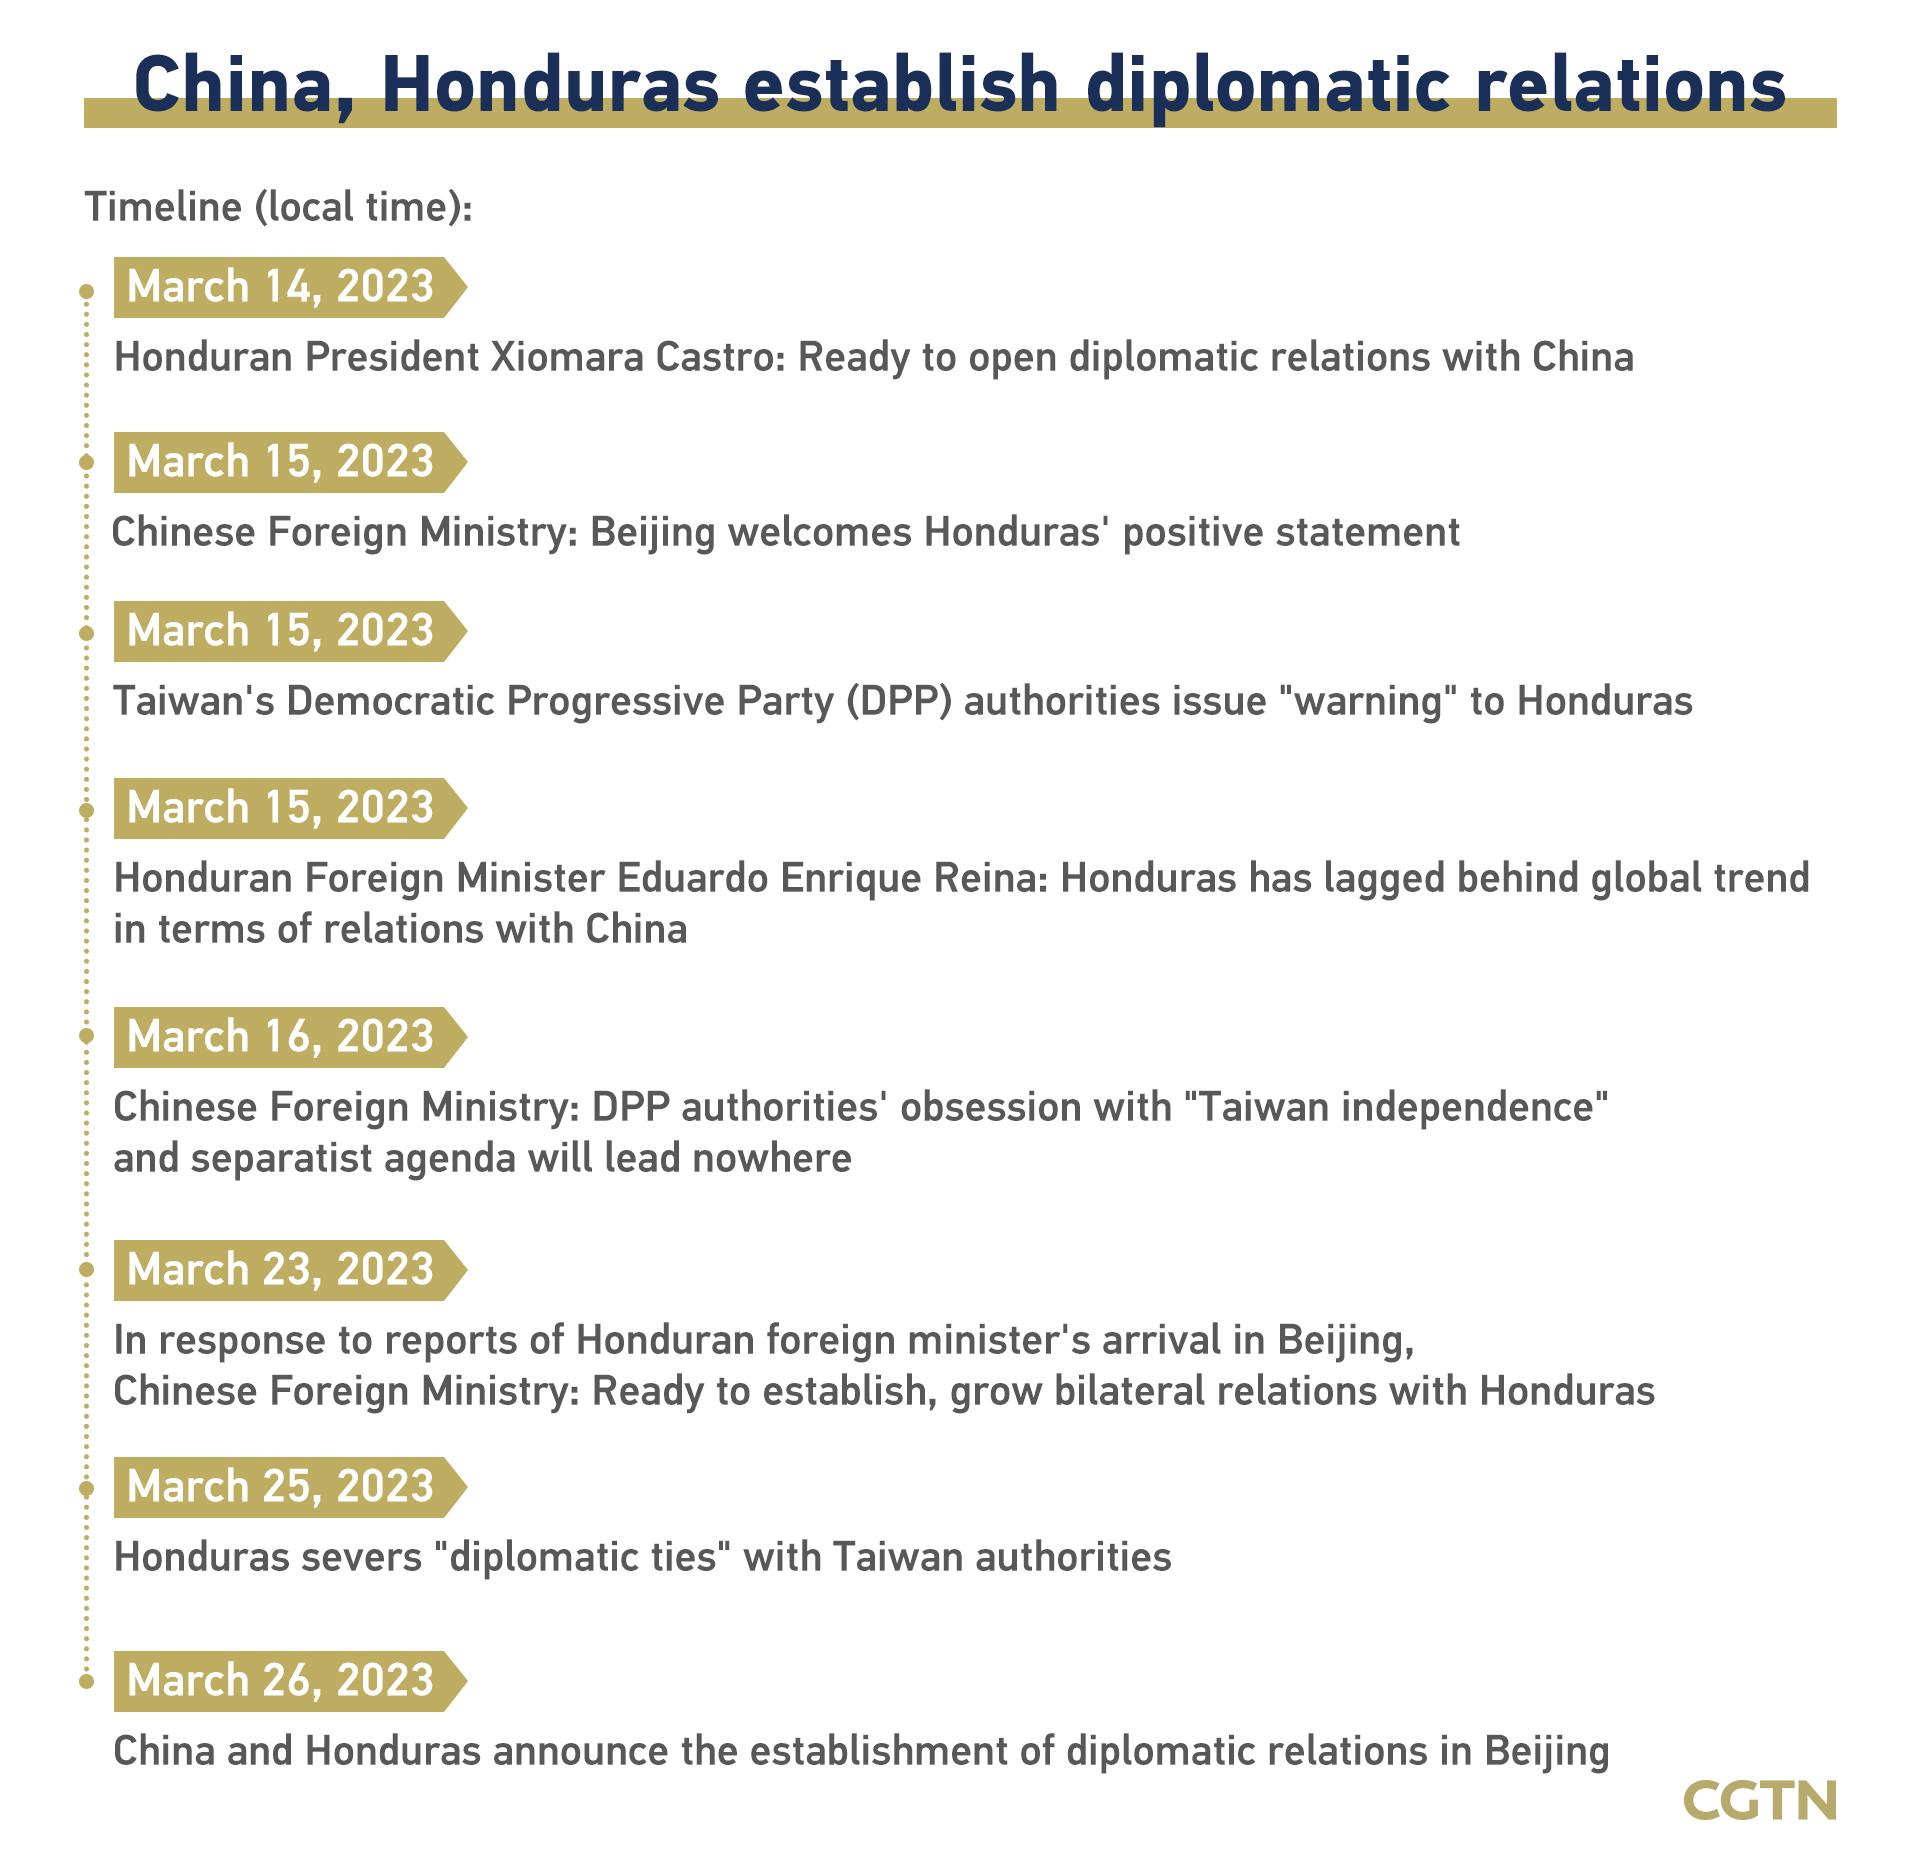 China, Honduras establish diplomatic ties